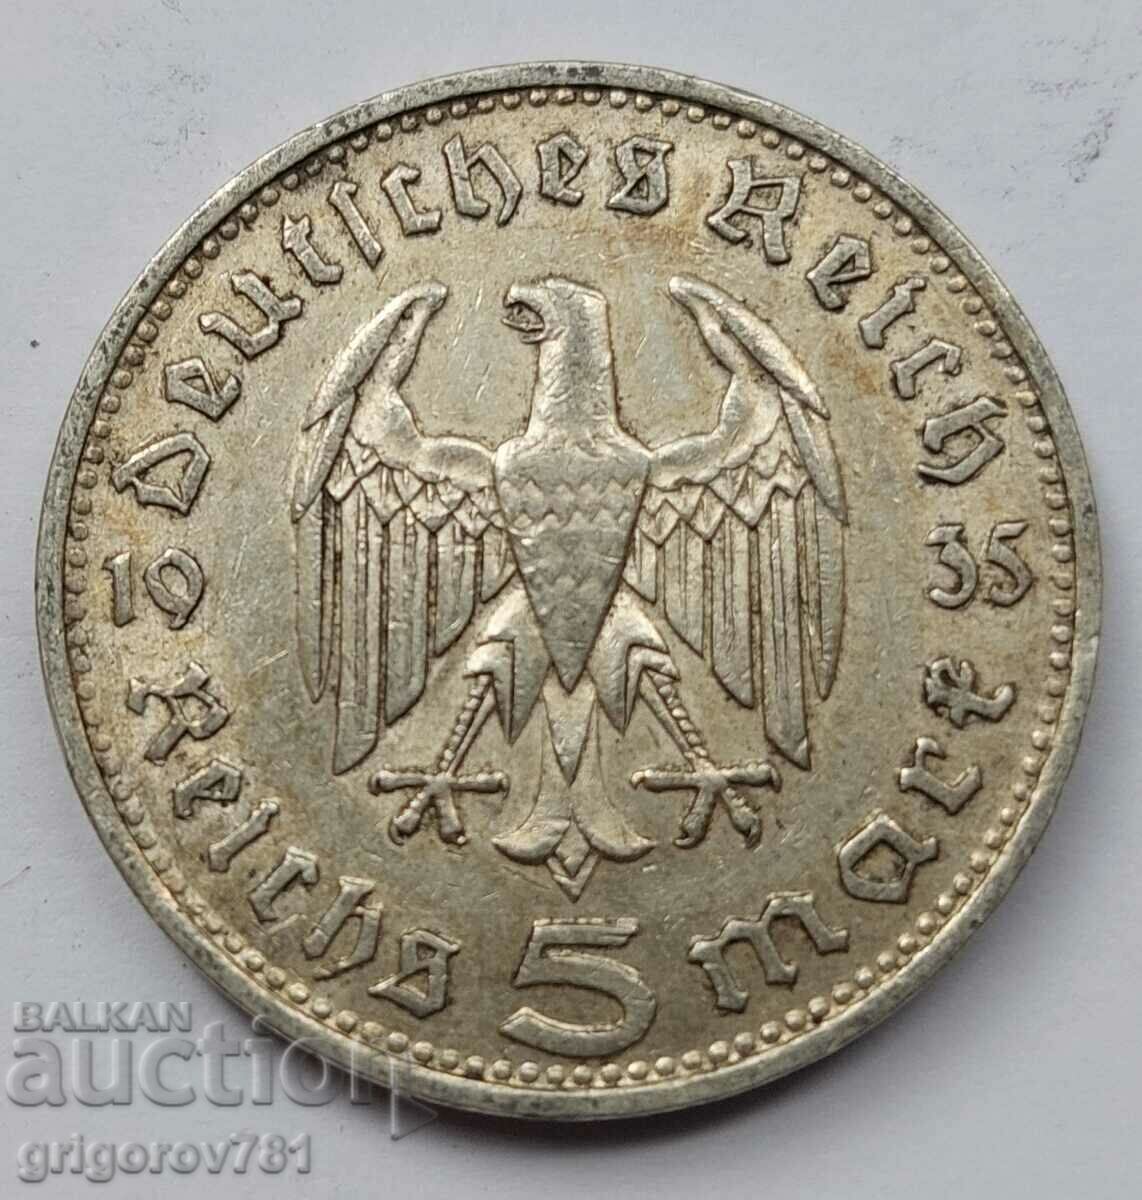 5 Mark Silver Γερμανία 1935 D III Reich Ασημένιο νόμισμα #69